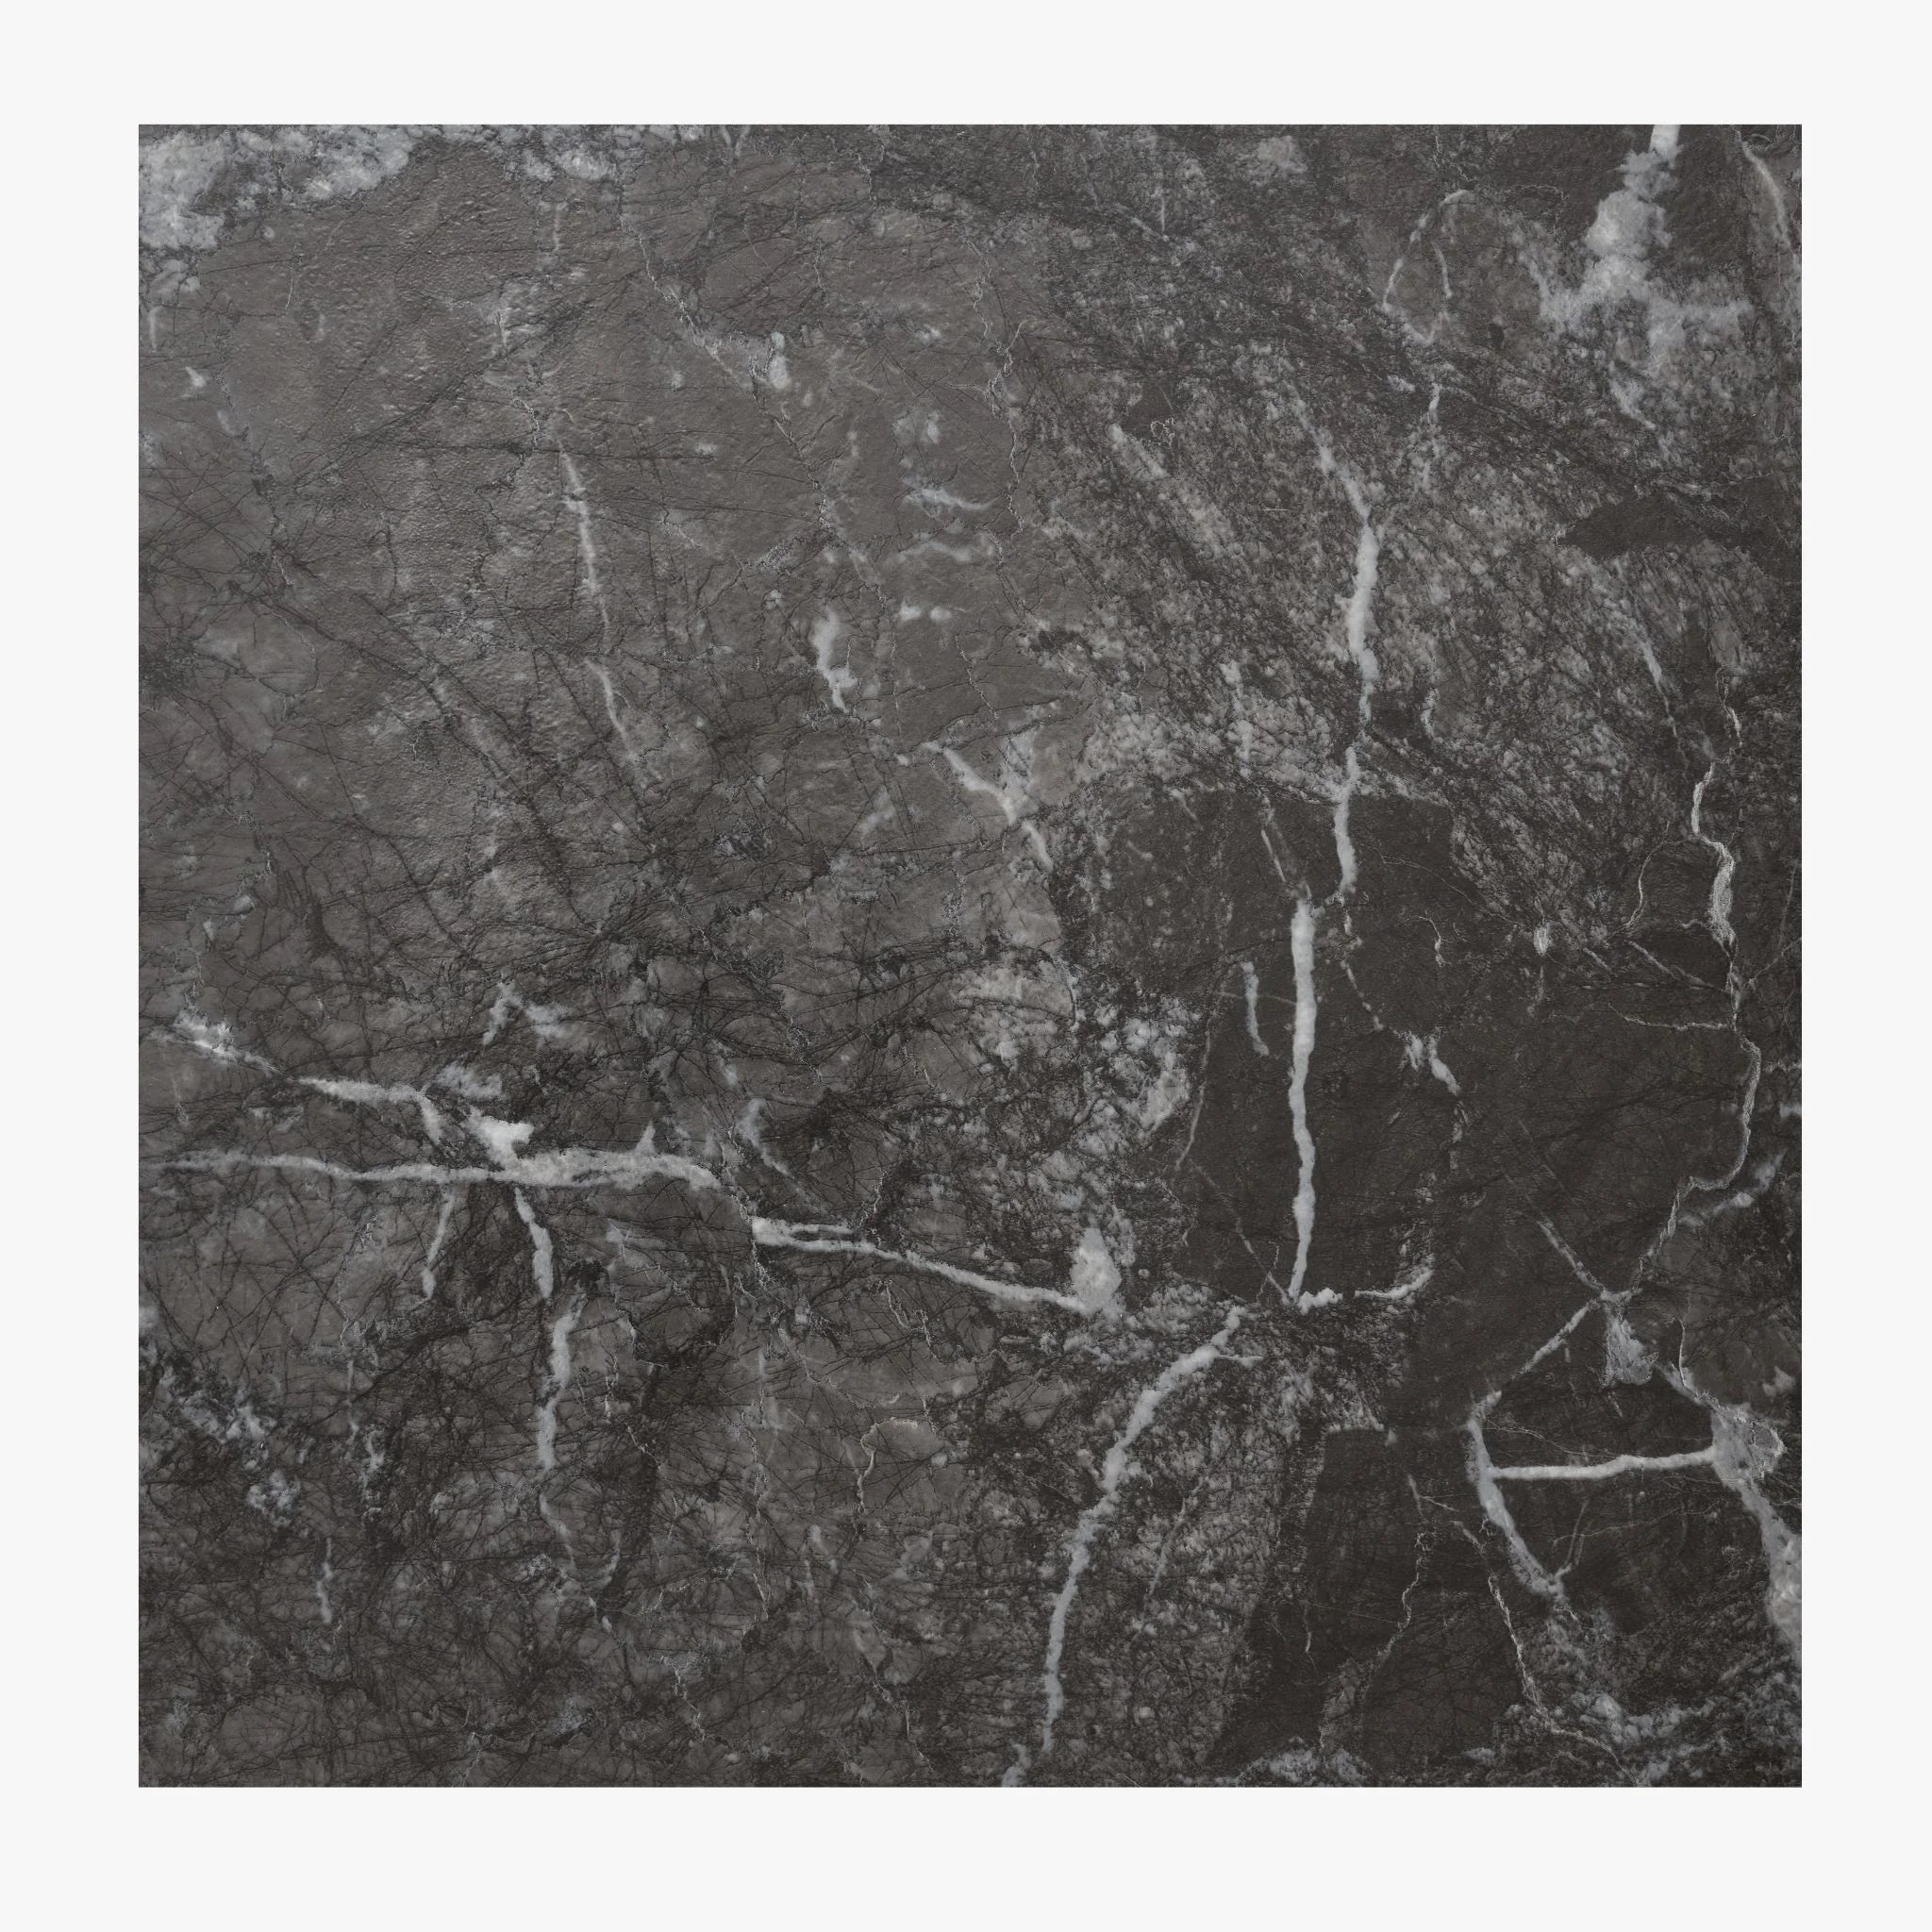 detailed view of black tile-effect concrete flooring with subtle grain patterns